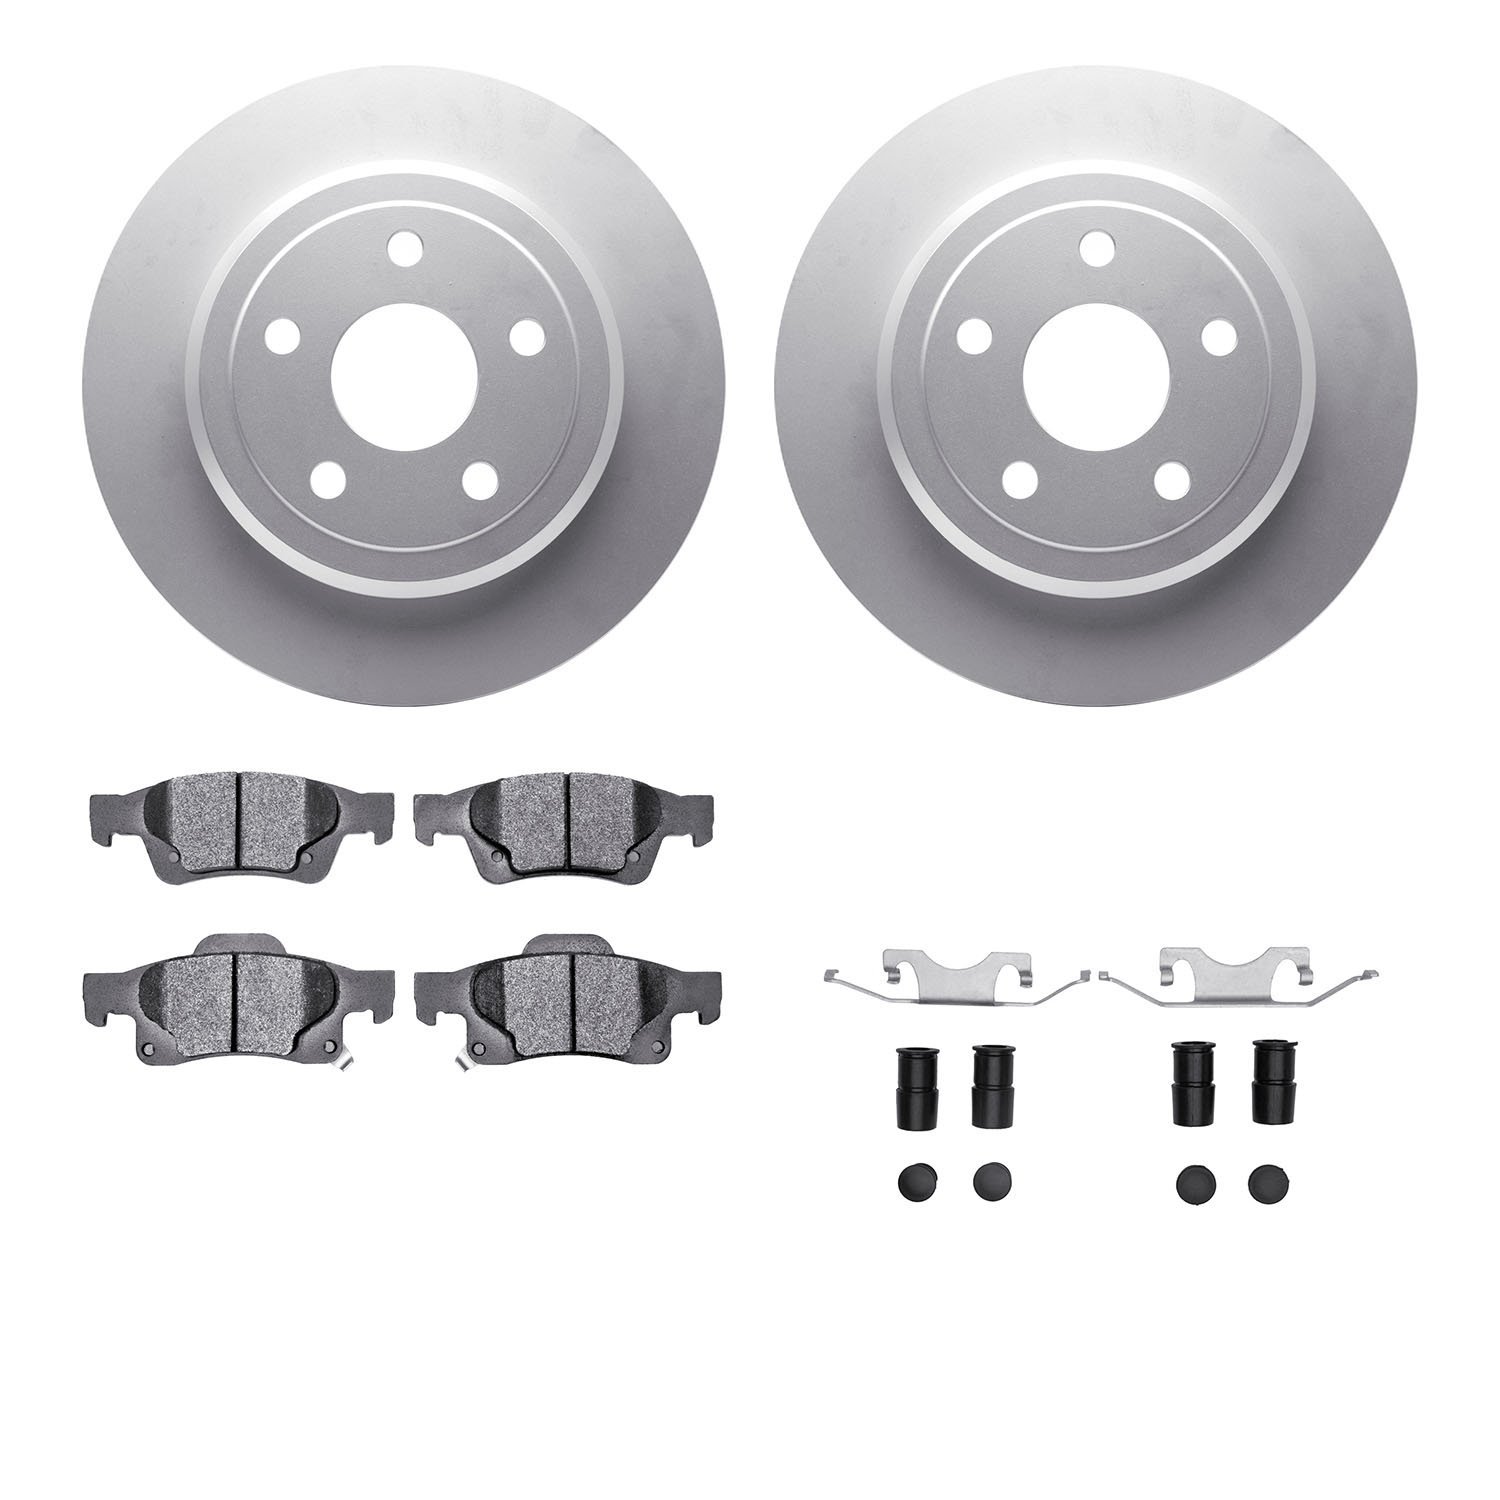 4412-42005 Geospec Brake Rotors with Ultimate-Duty Brake Pads & Hardware, Fits Select Mopar, Position: Rear